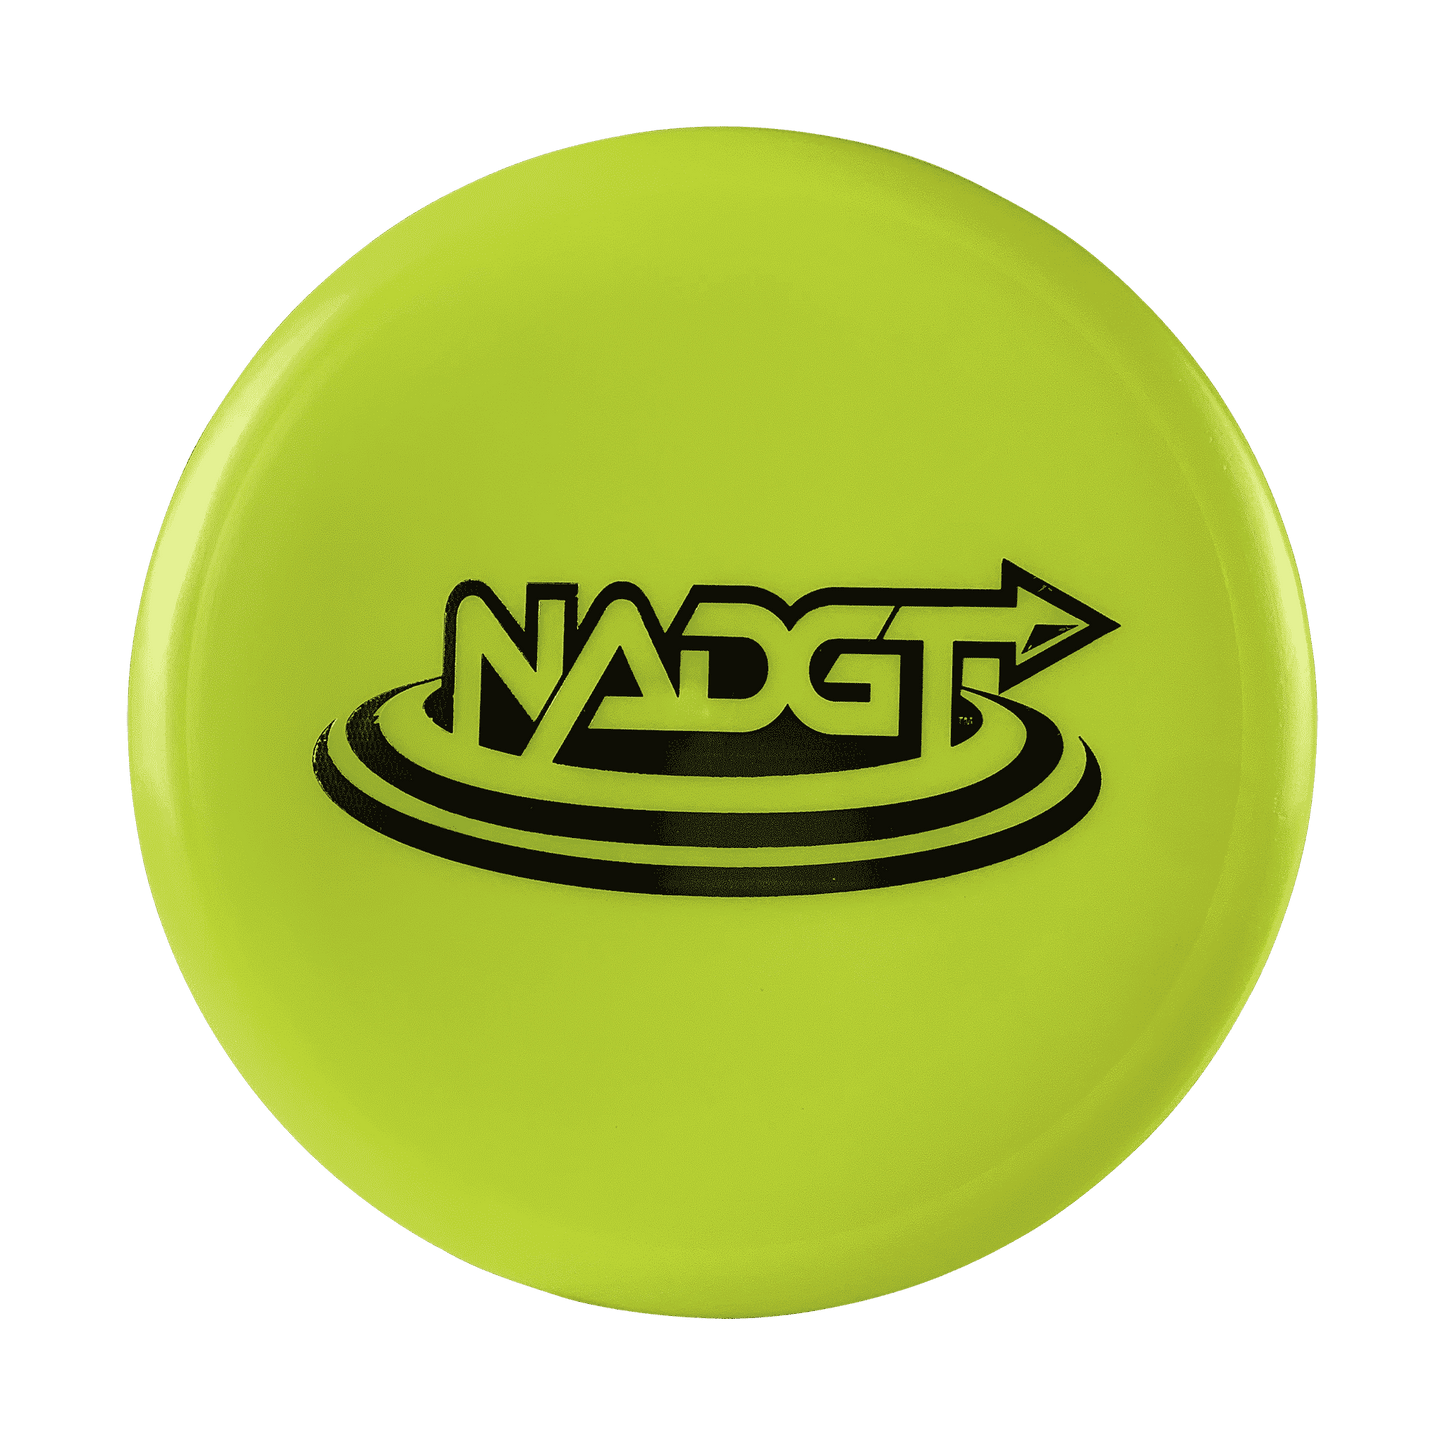 PL Rift - NADGT Stamp Disc DGA yellow 177 